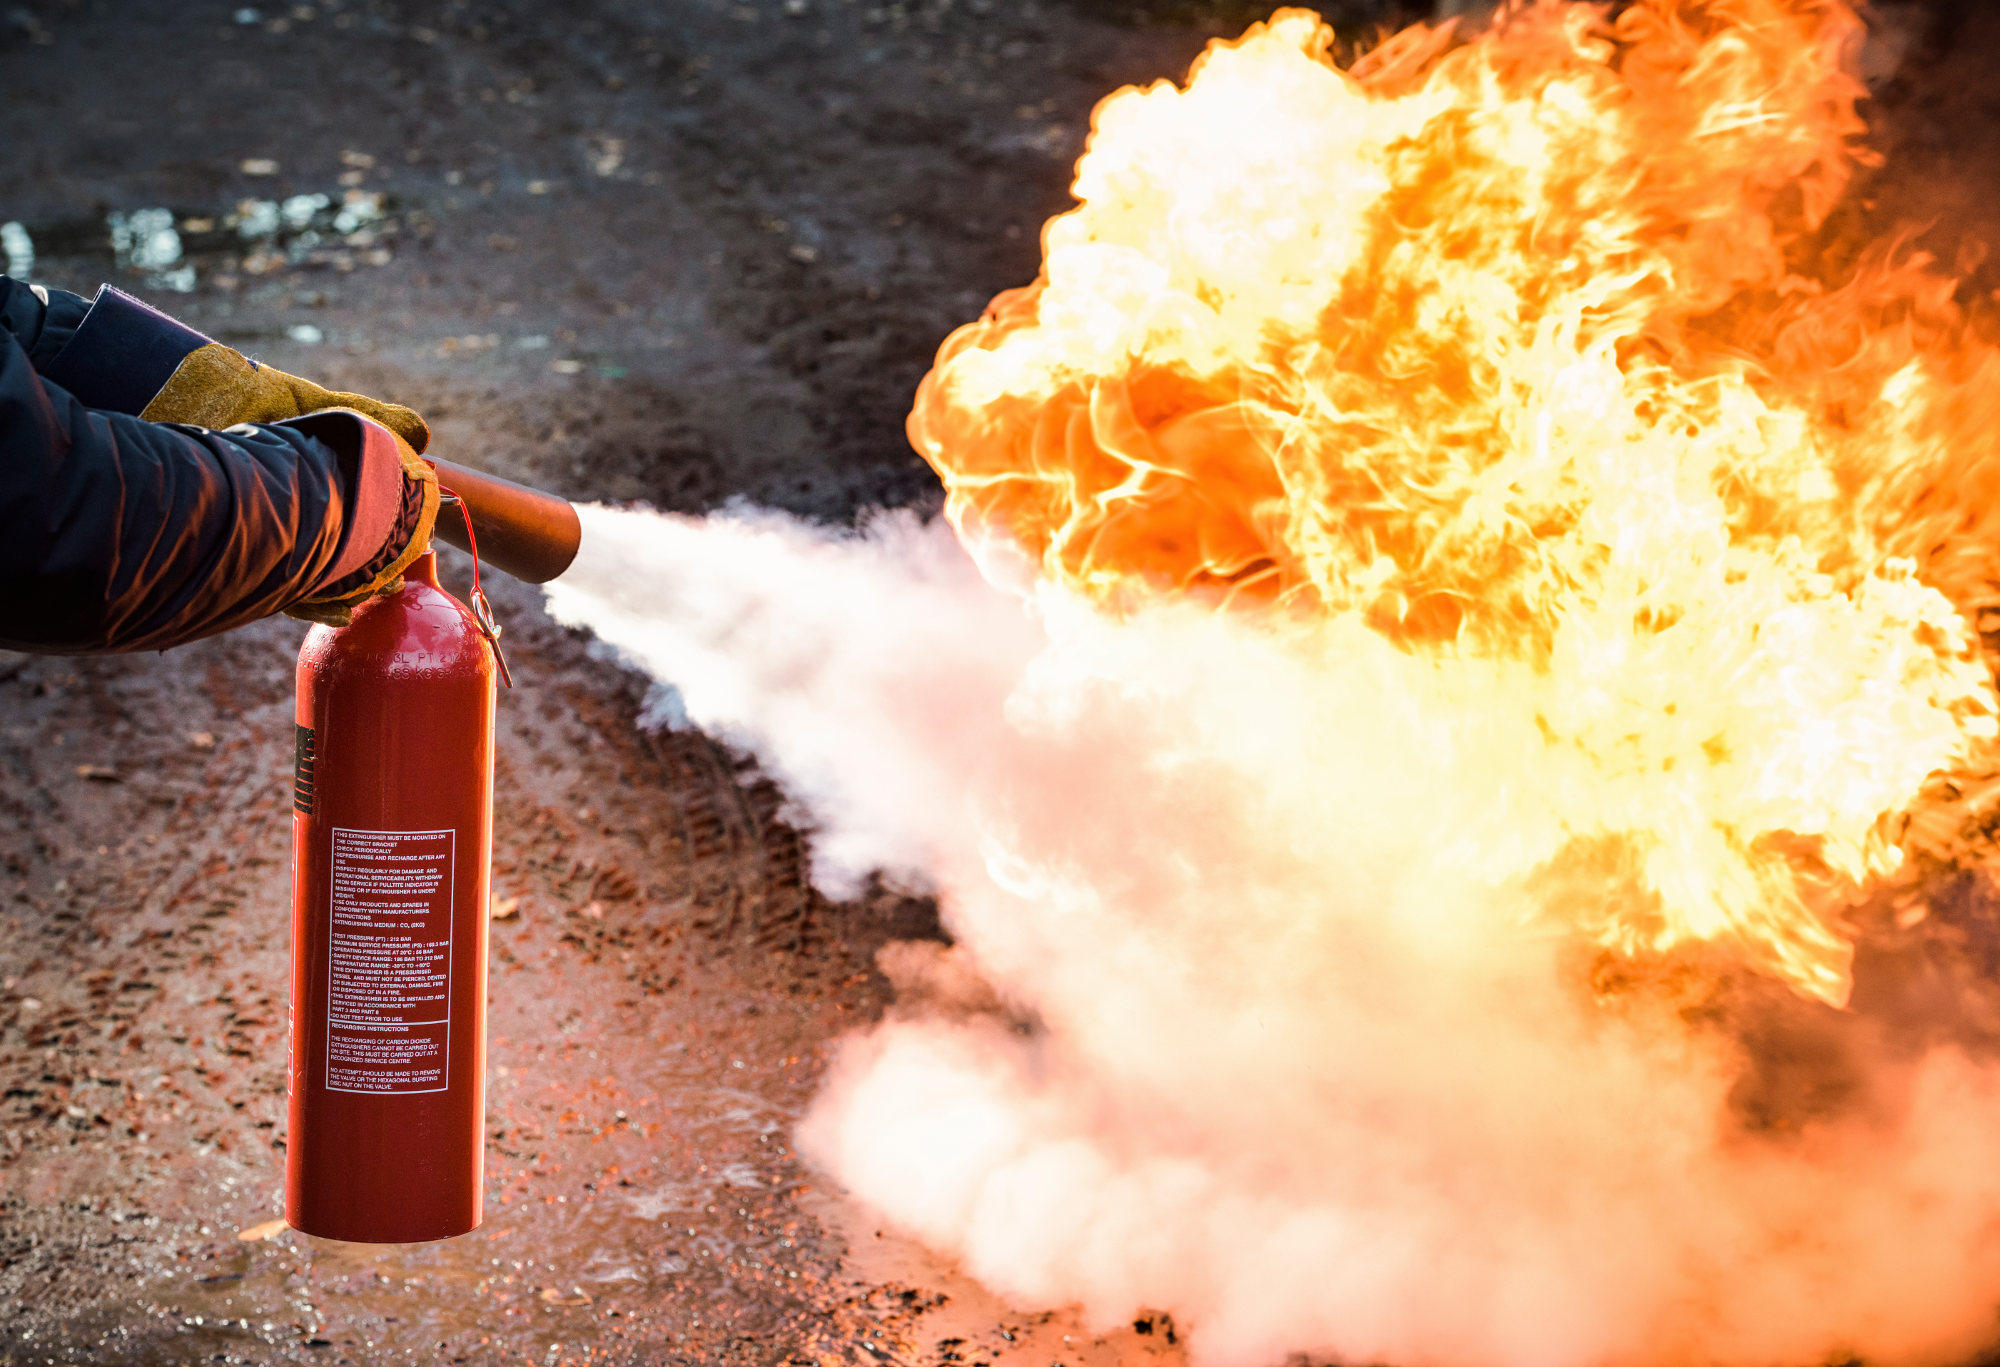 B-Safe extinguisher